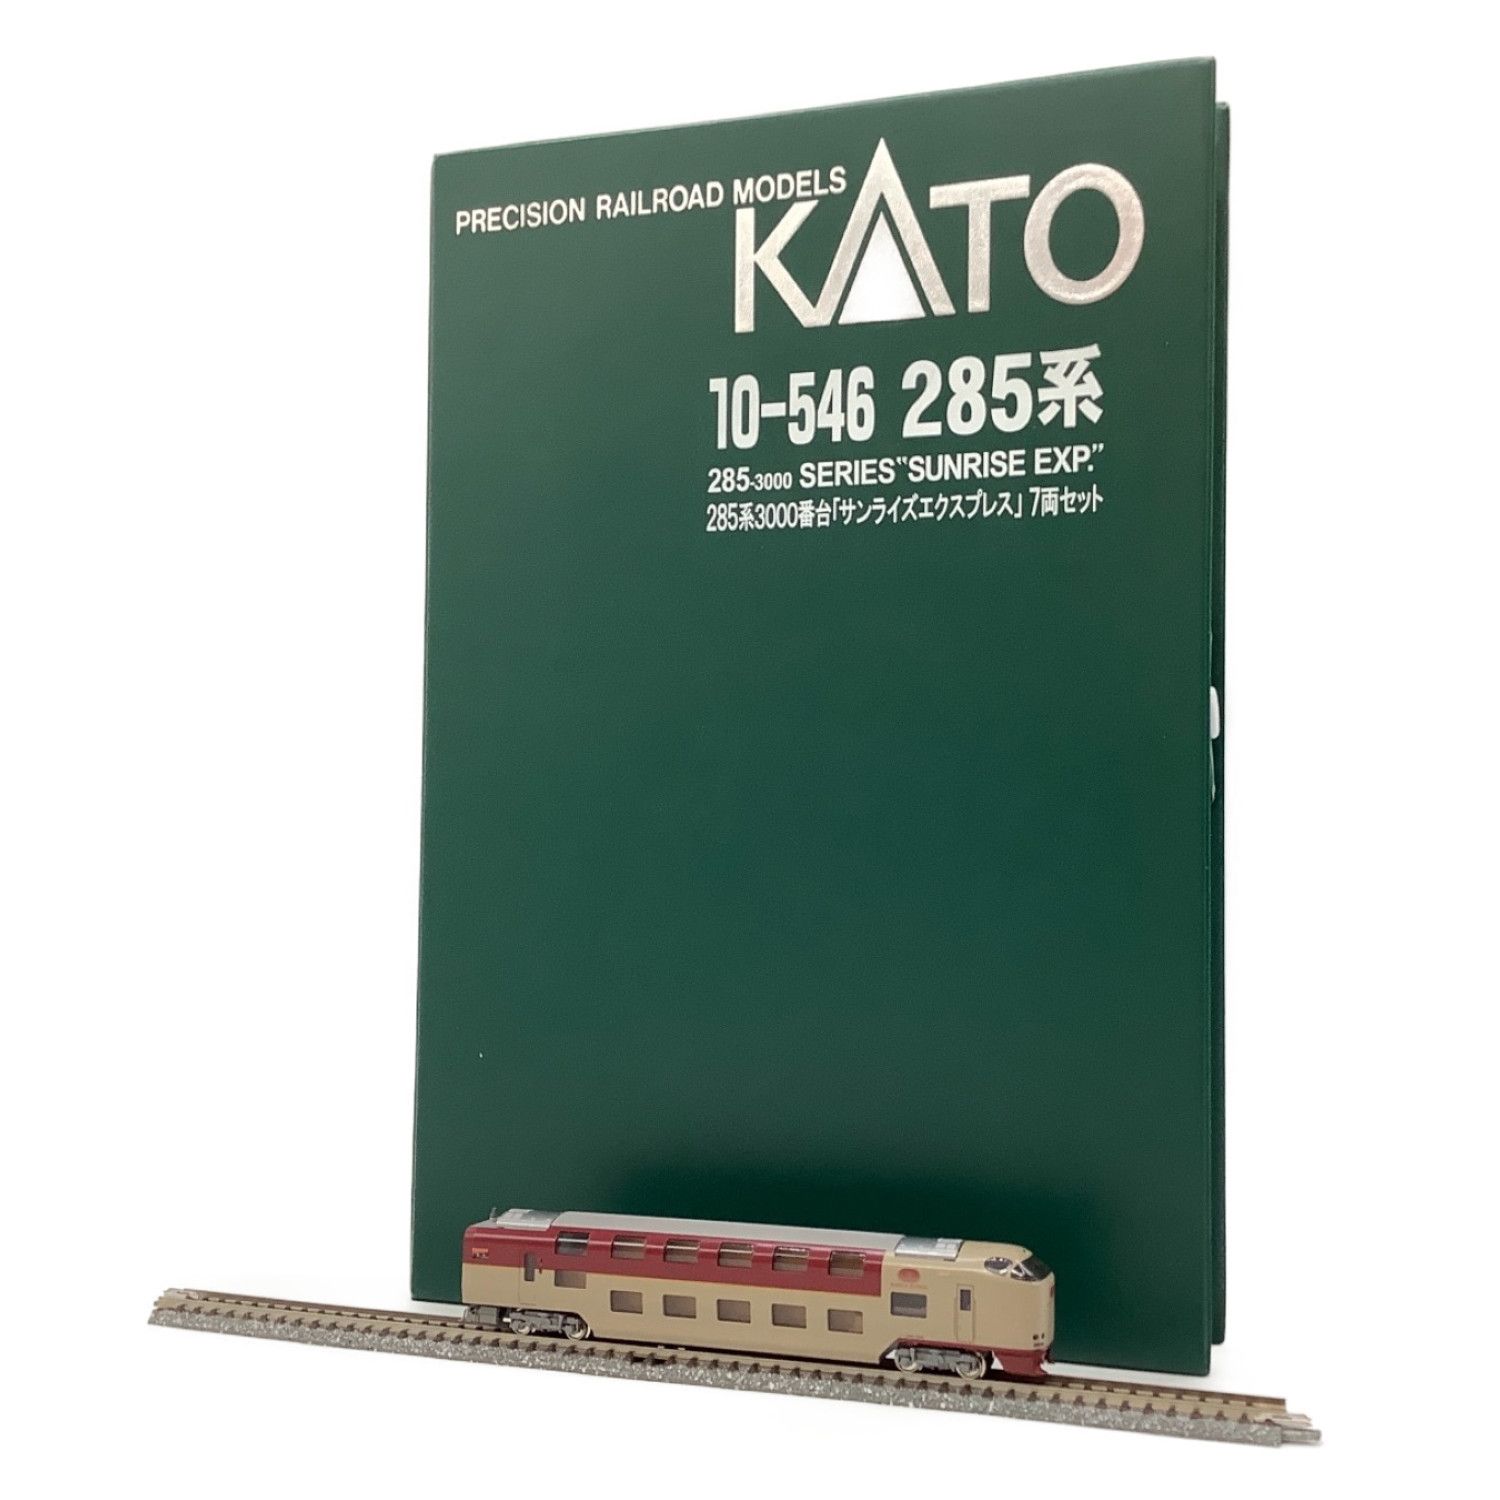 KATO (カトー) Nゲージ 285系3000番台「サンライズエクスプレス」7両 